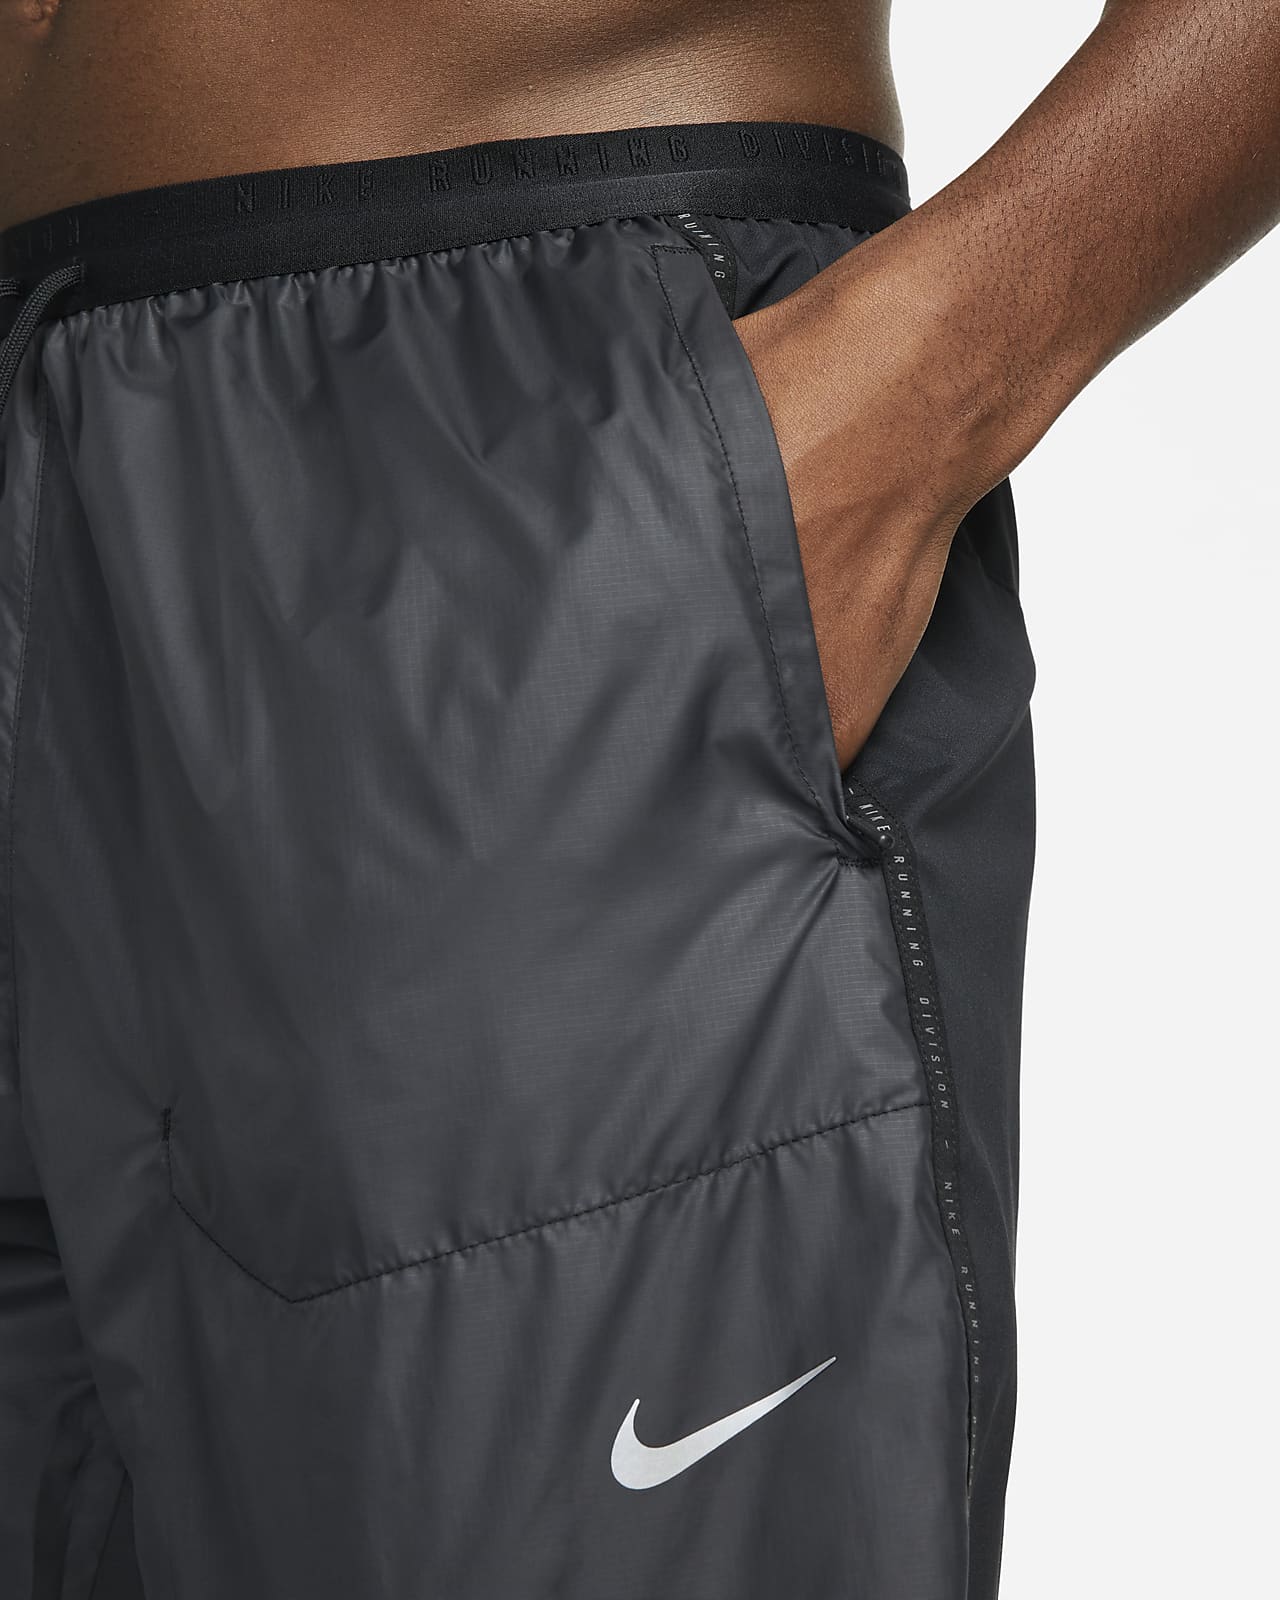 Nike Storm-FIT Division Phenom Pantalones Running Hombre - Black